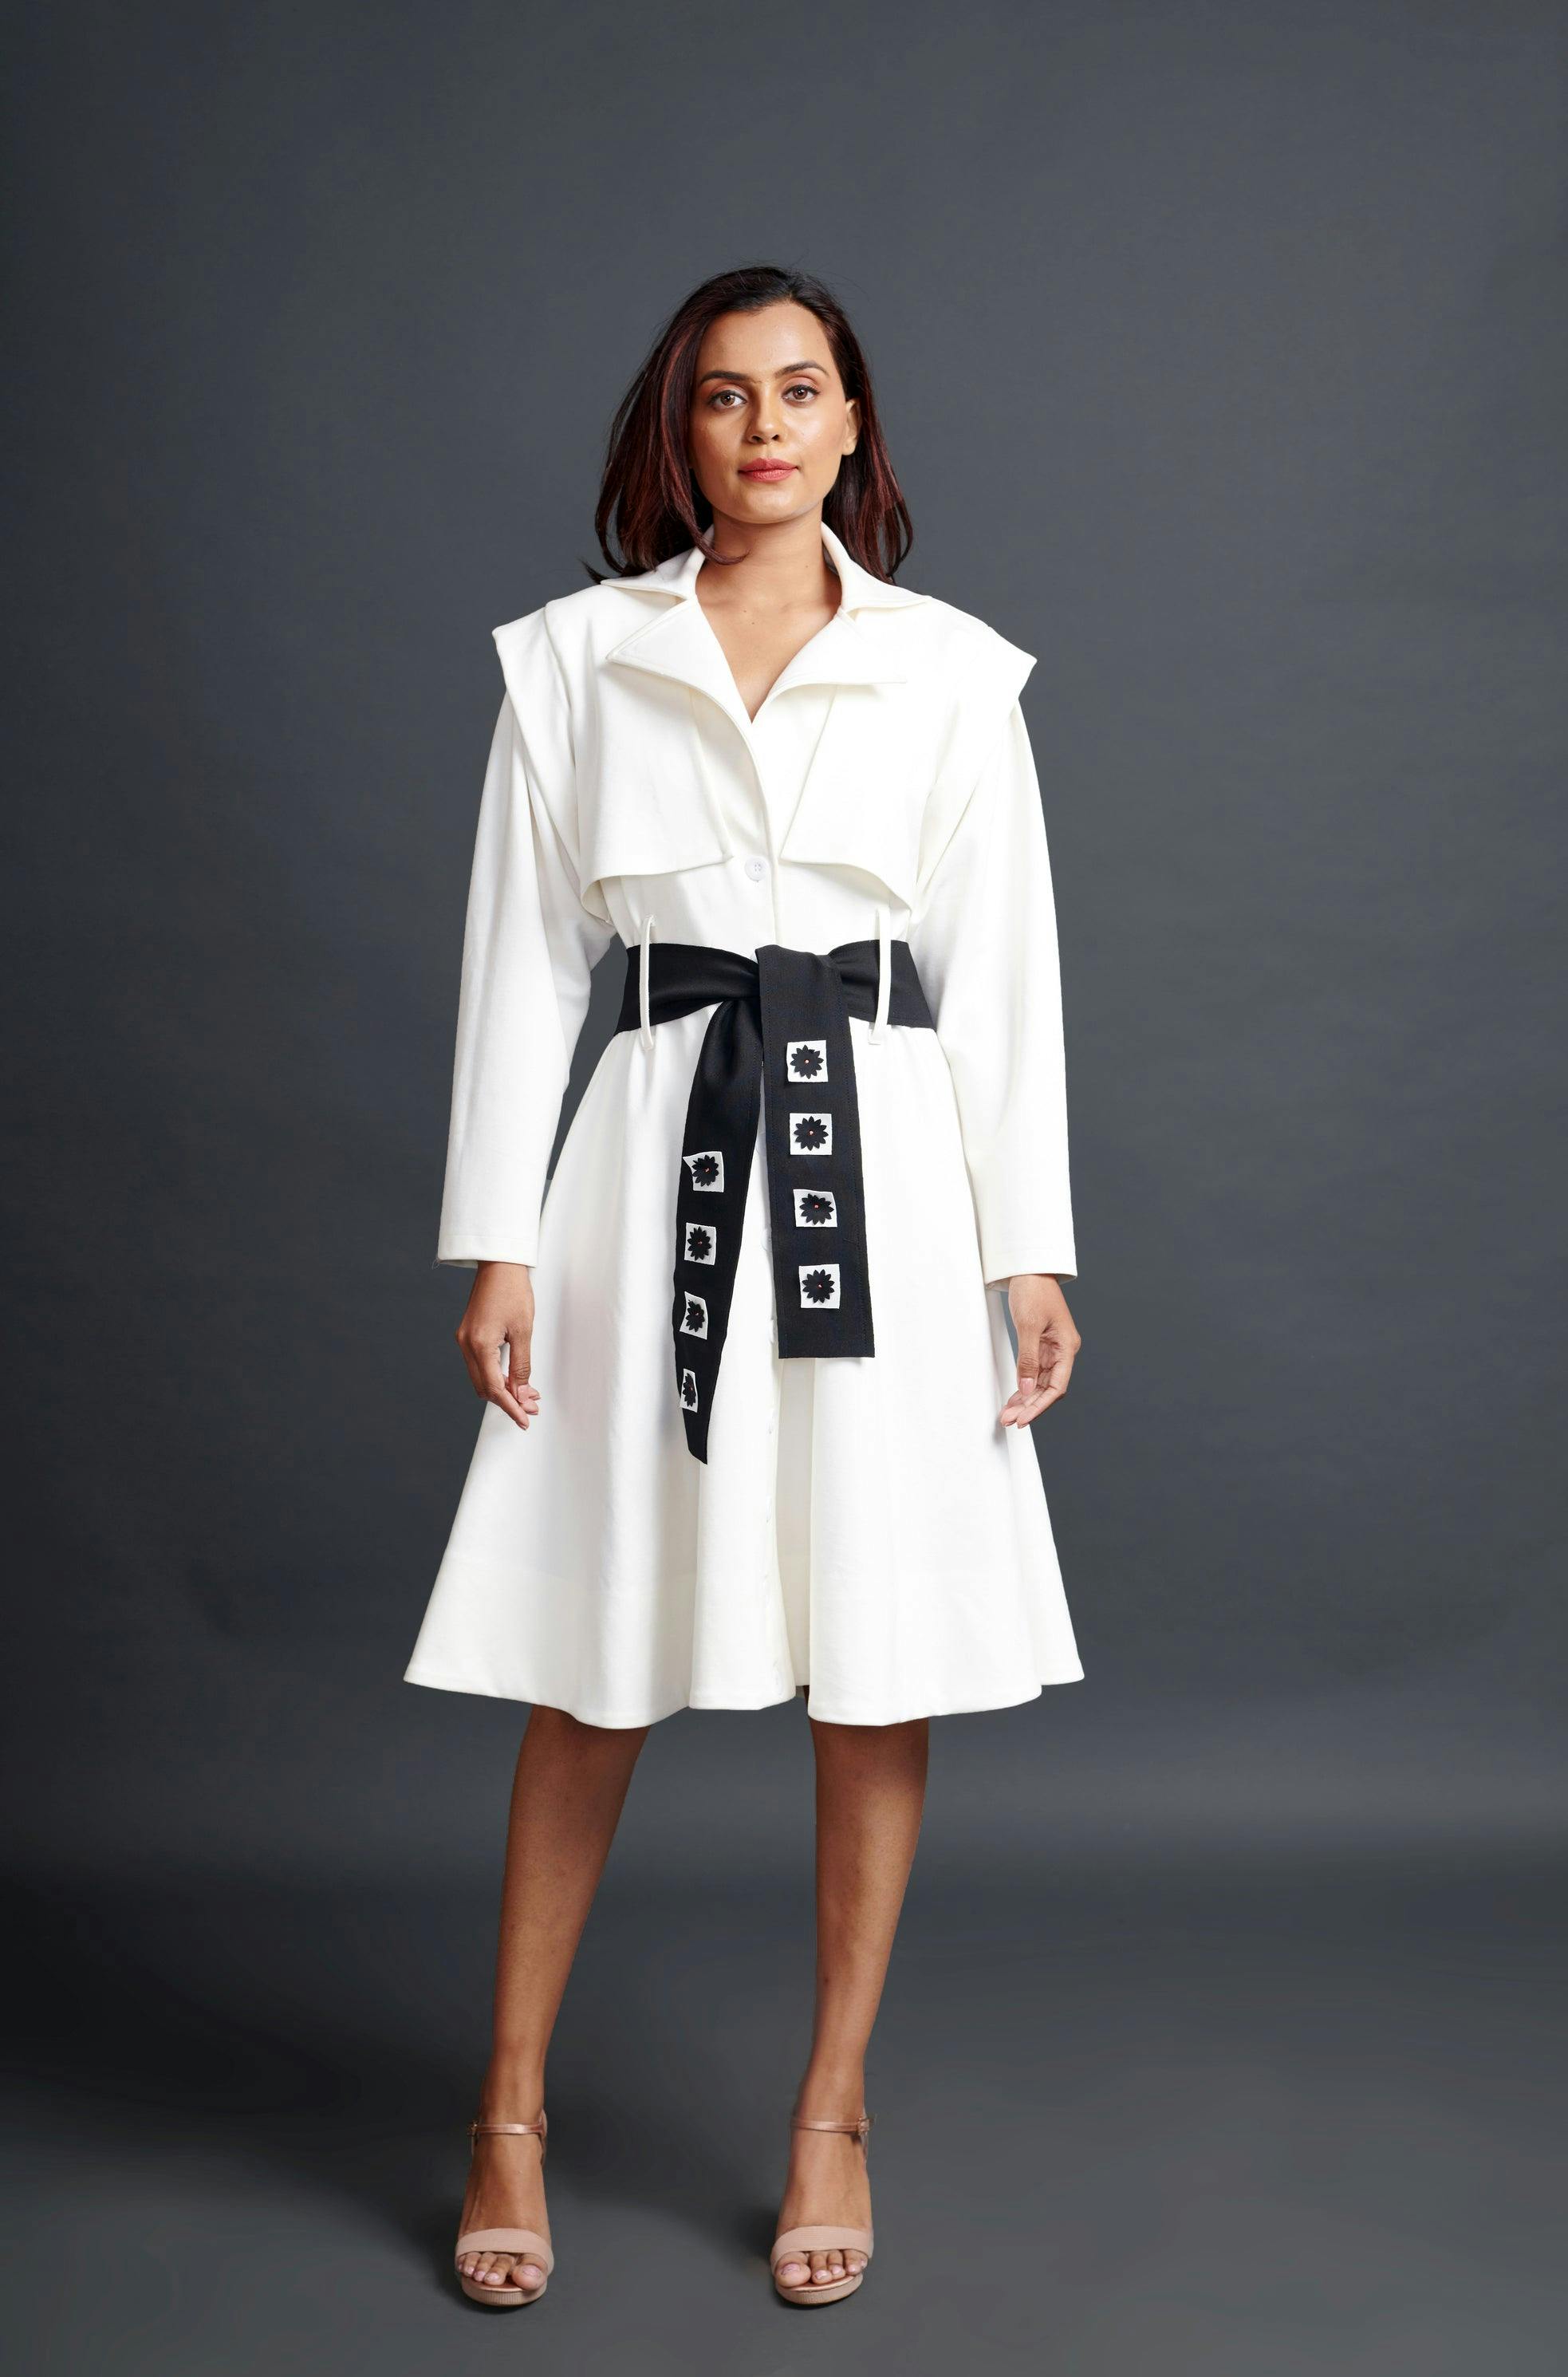 WF-1110-WHITE ::: White Jacket Dress With Sash Belt, a product by Deepika Arora